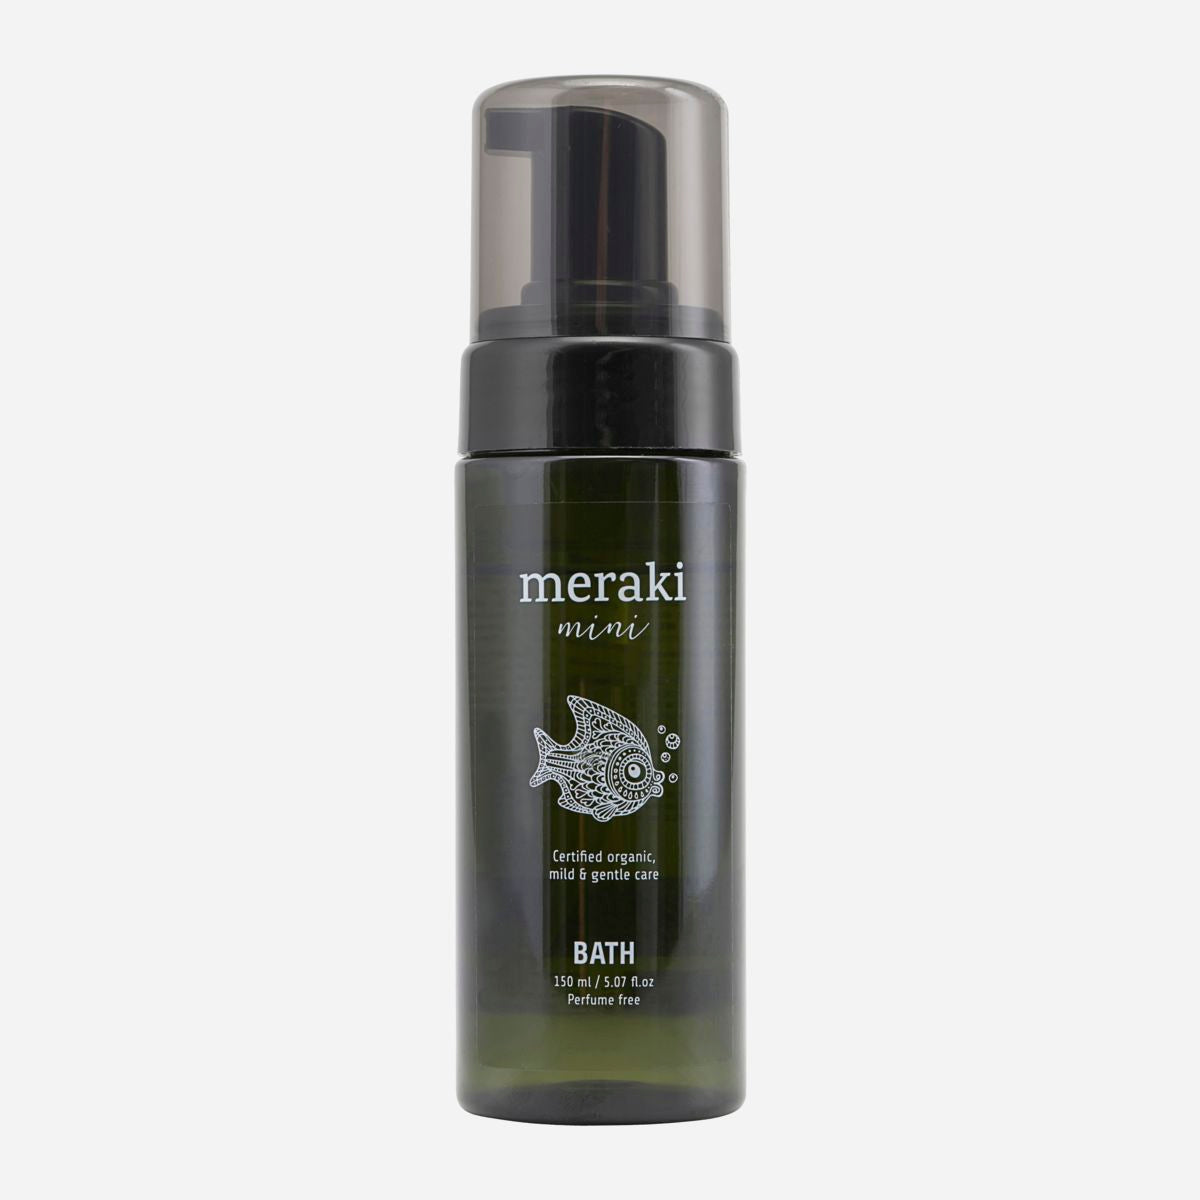 Meraki Perfume-free Bath Soap - The Jute Basket 